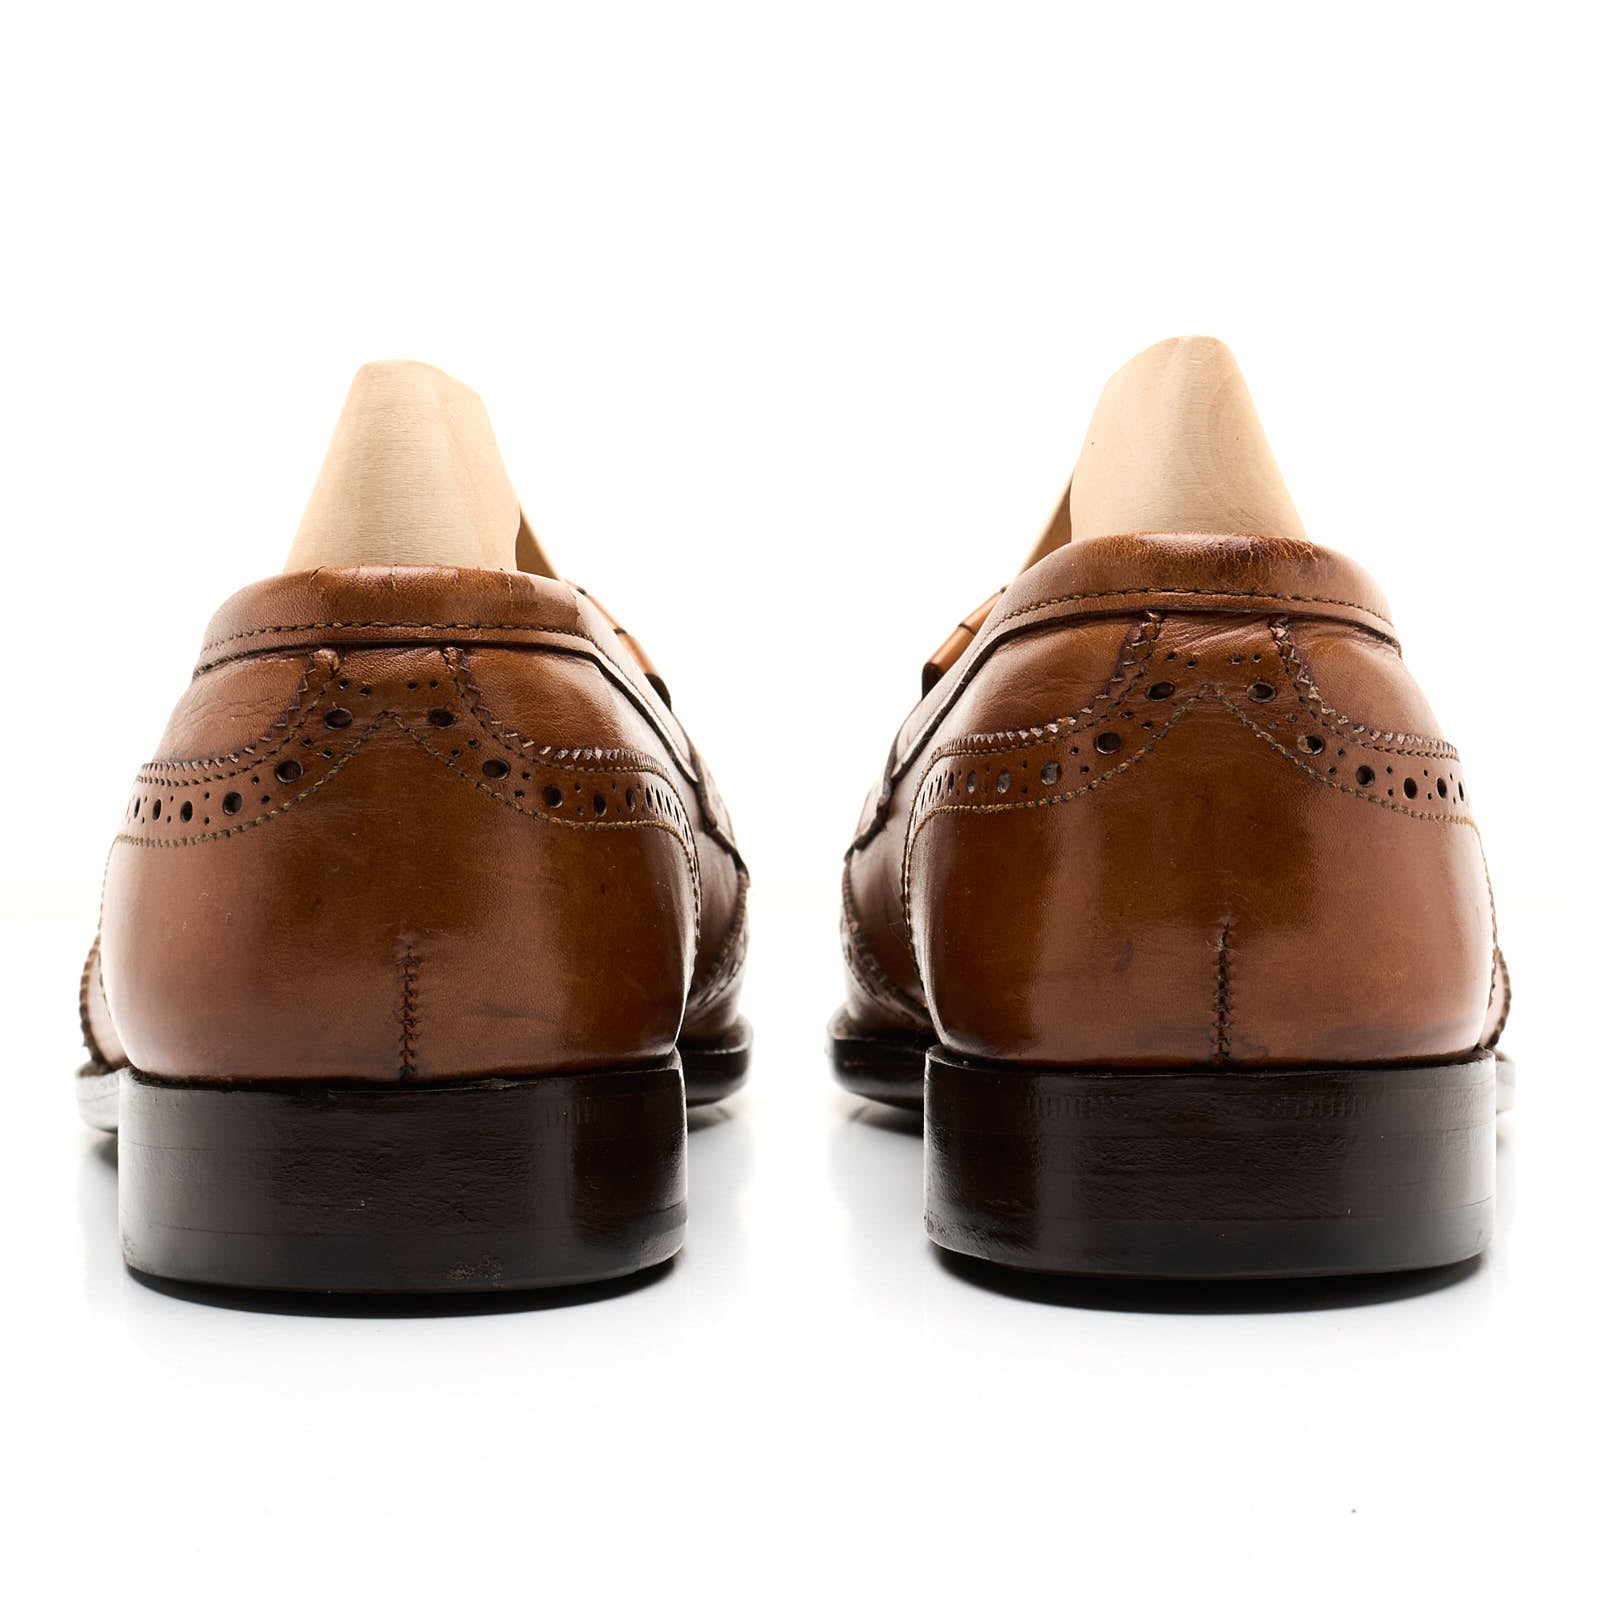 ALDEN 610 for Mills Touche Cognac Tassel Kilts Wing Tip Loafer Shoes US 8.5 C/E